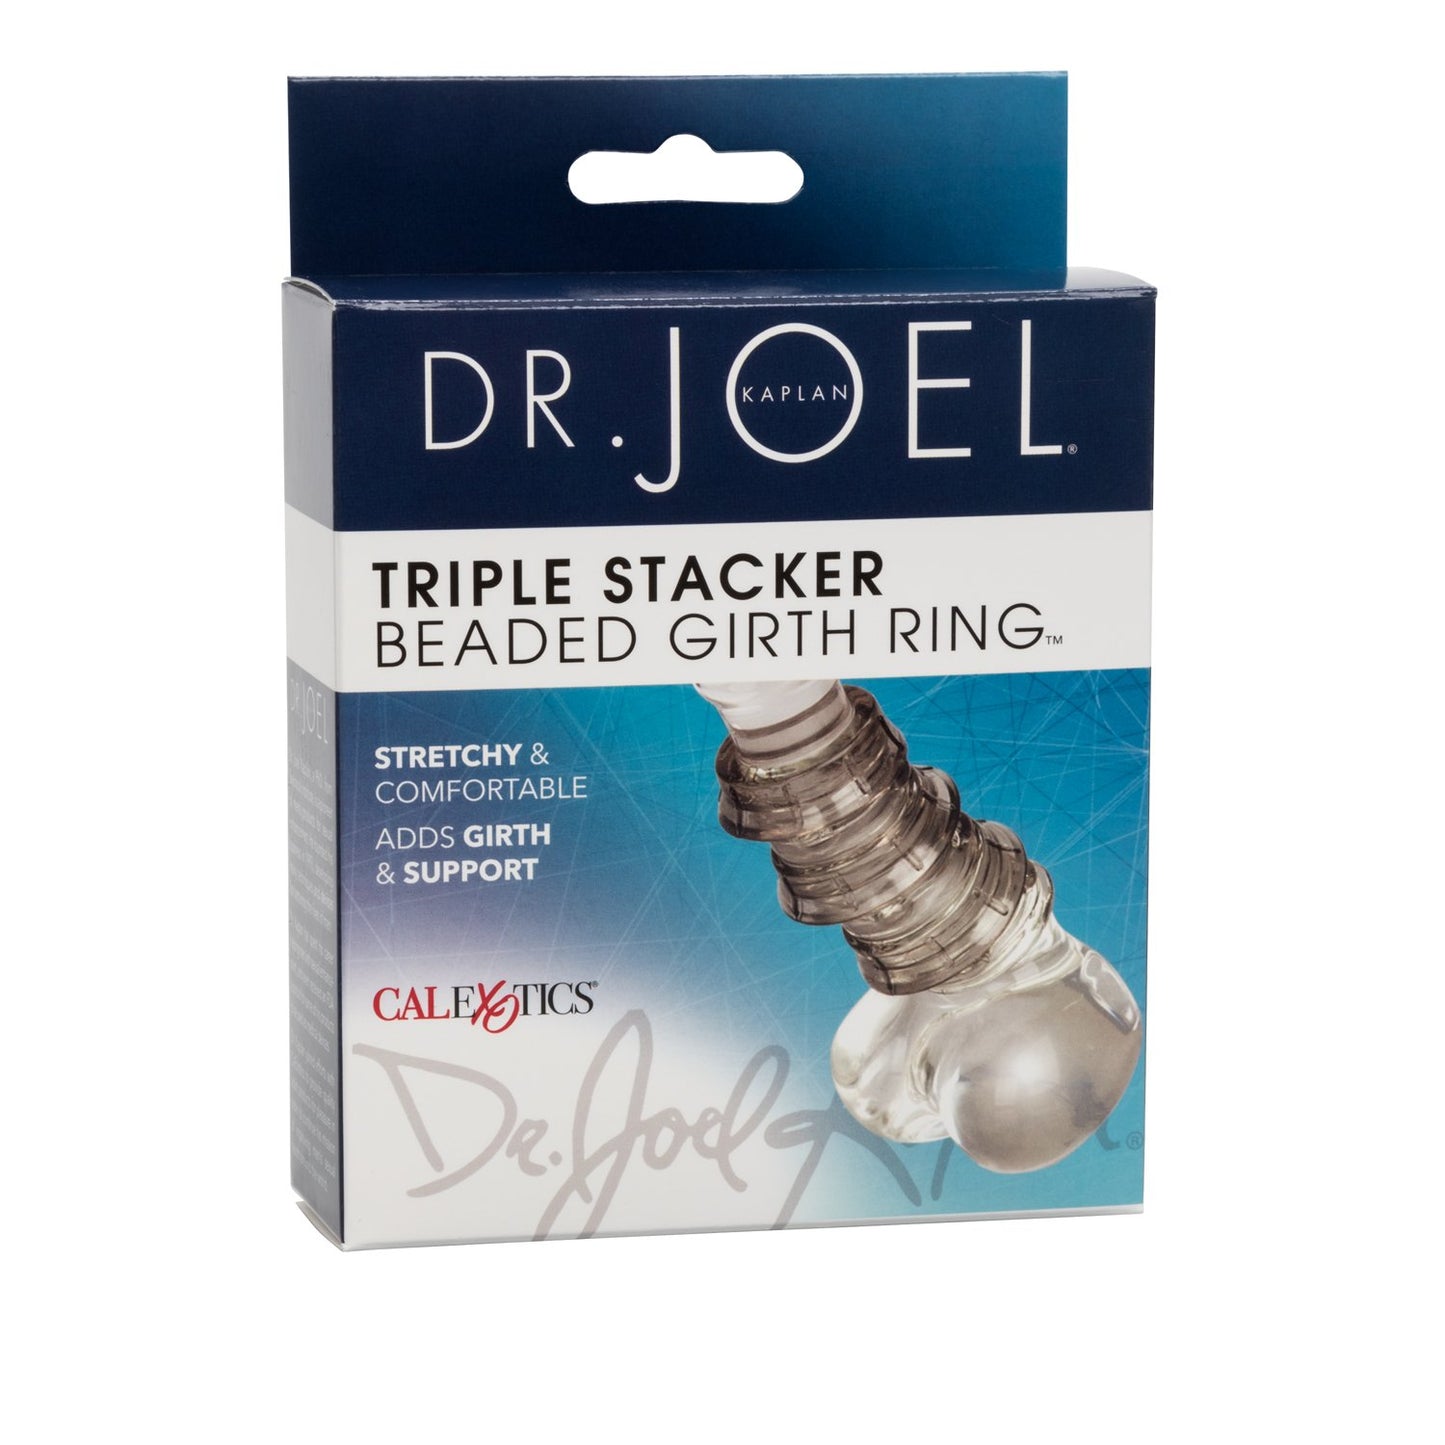 Dr. Joel Kaplan Triple Stacker Beaded Girth Ring